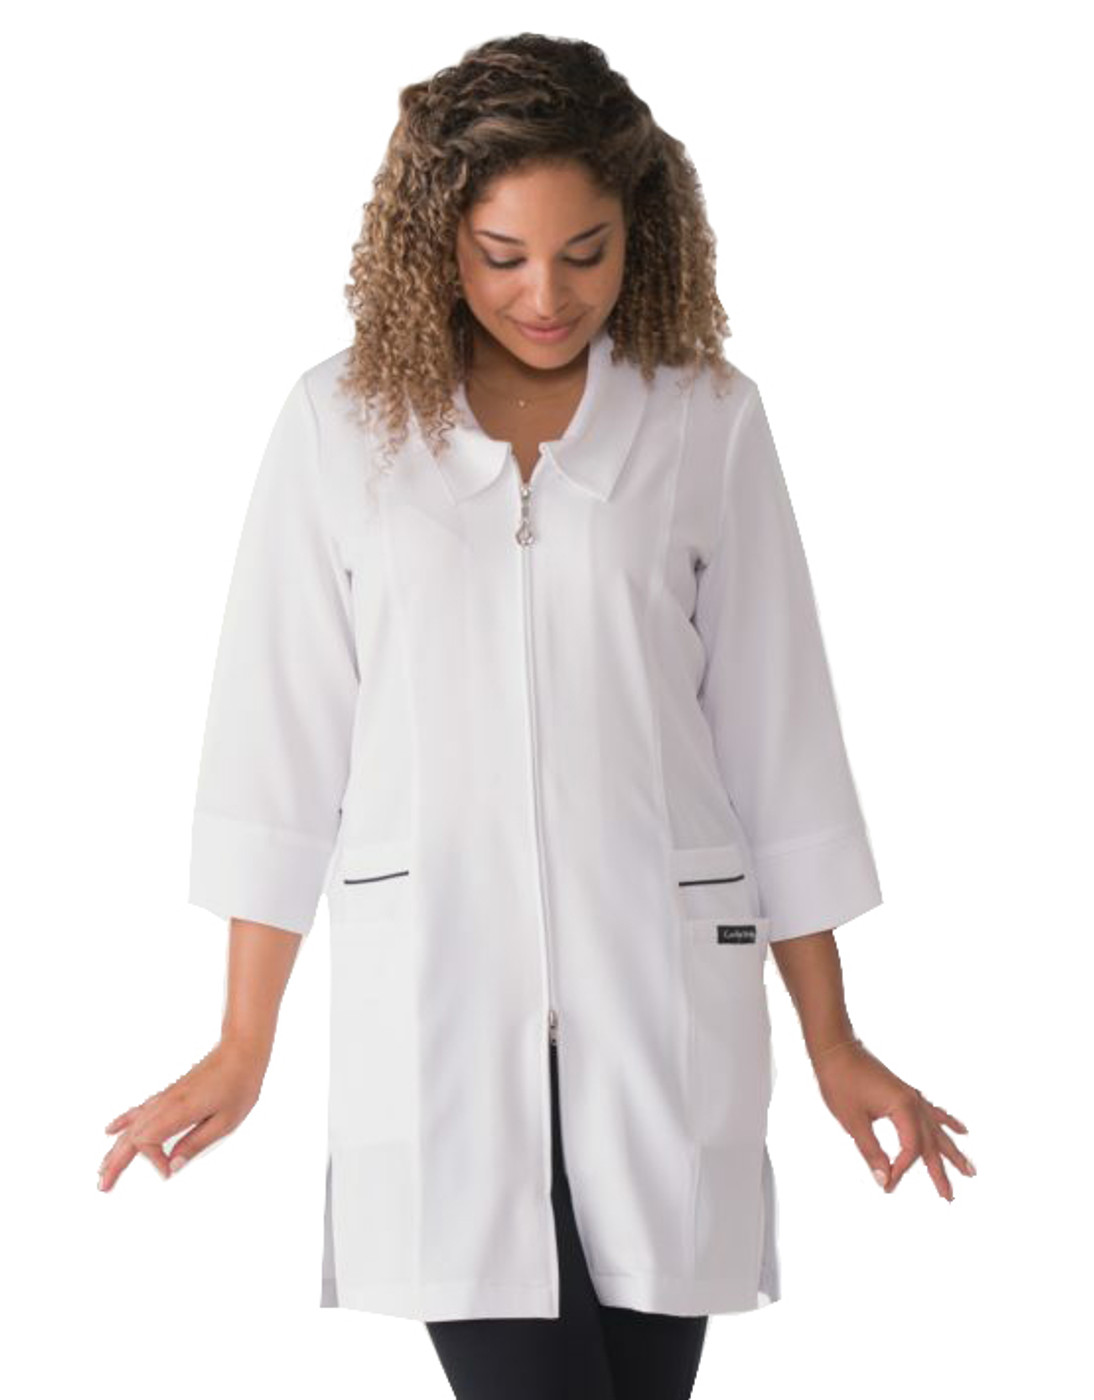 Carolyn Design Overwhelming , Wrinkle free Nursing Scrub Jackets